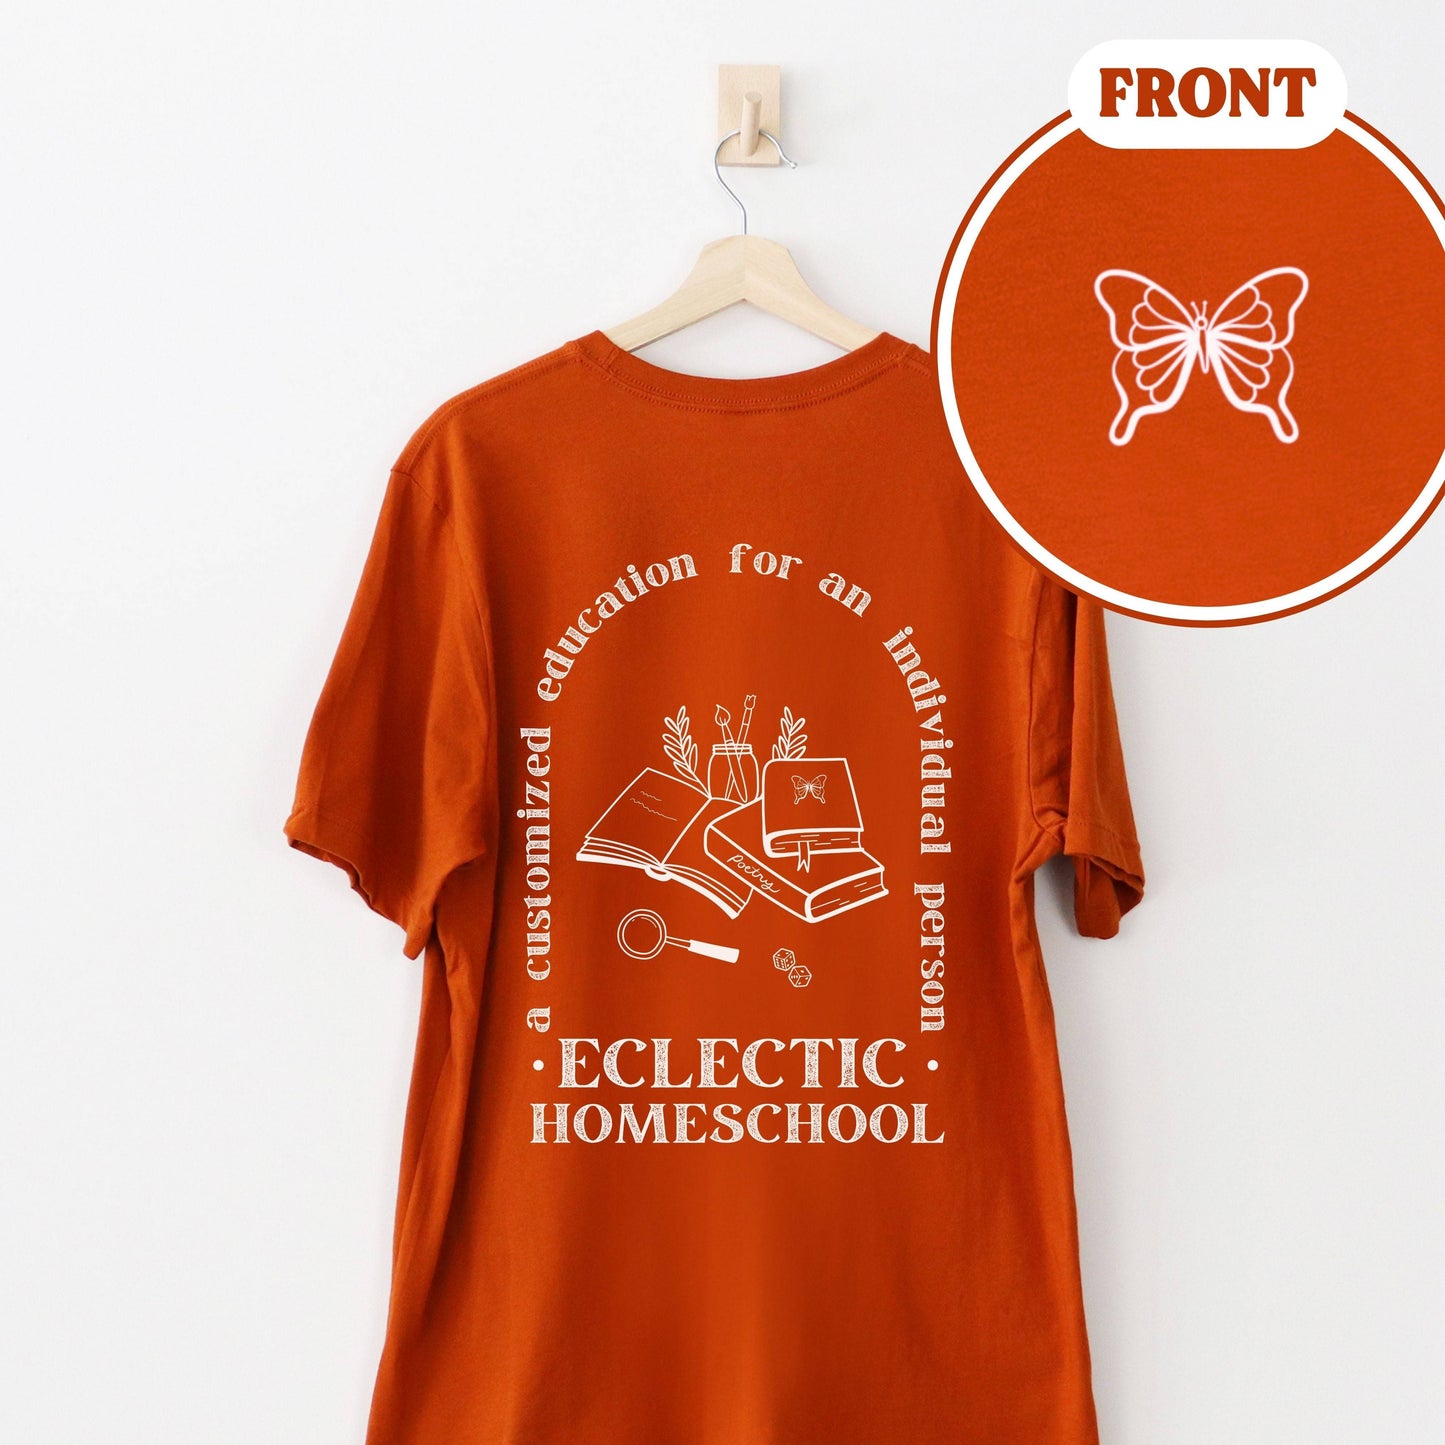 Eclectic Homeschool Short Sleeve Tee Shirt for Mom